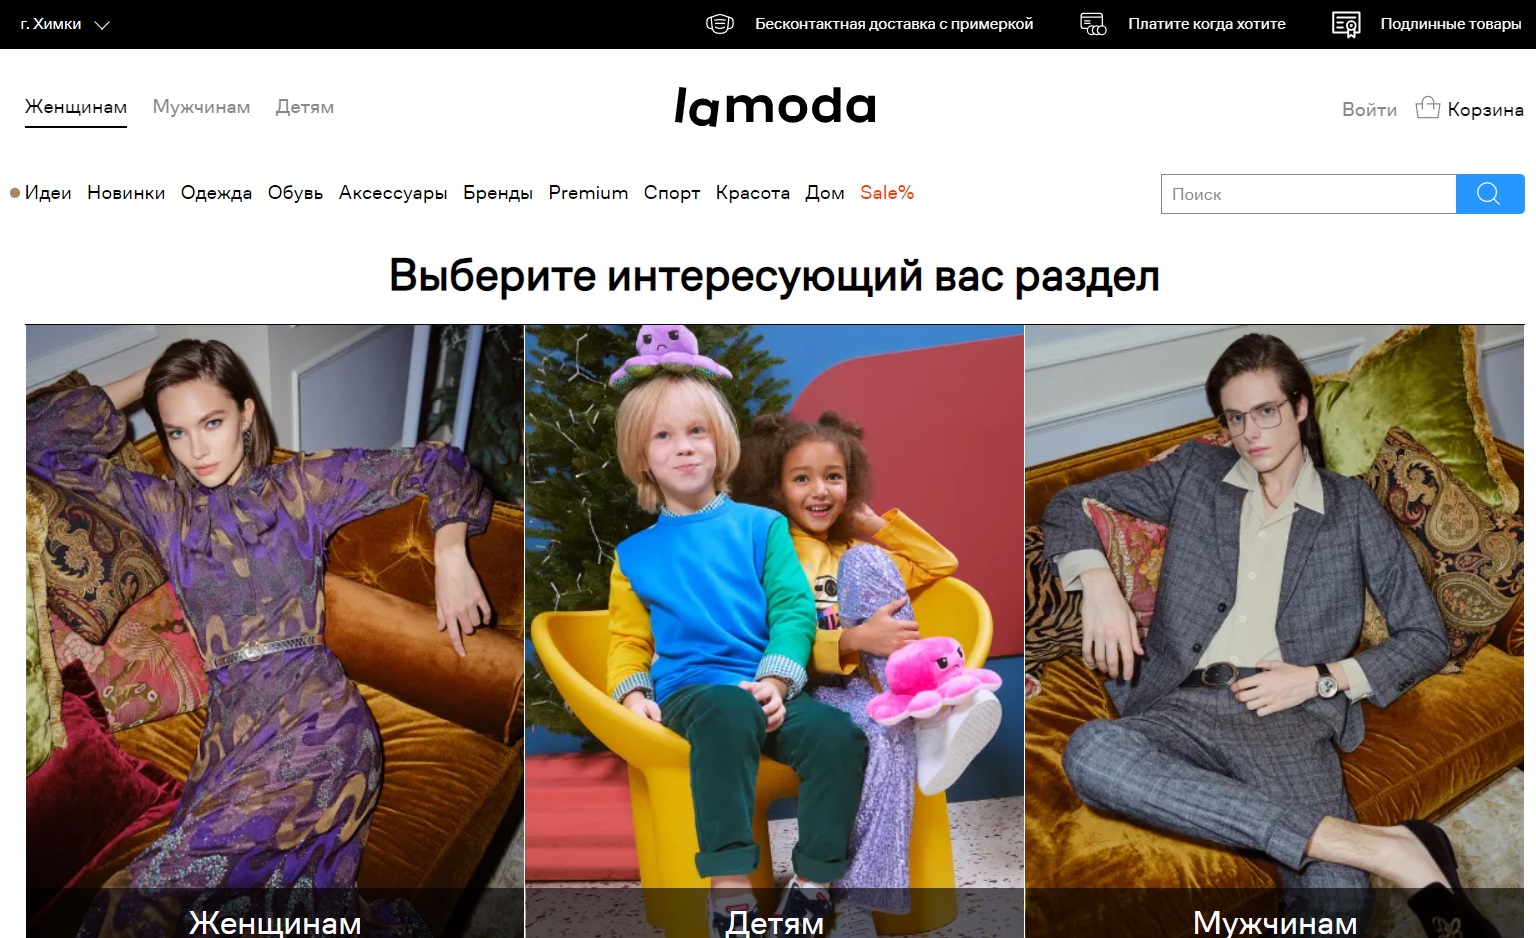 Lamoda официальный сайт интернет-магазина